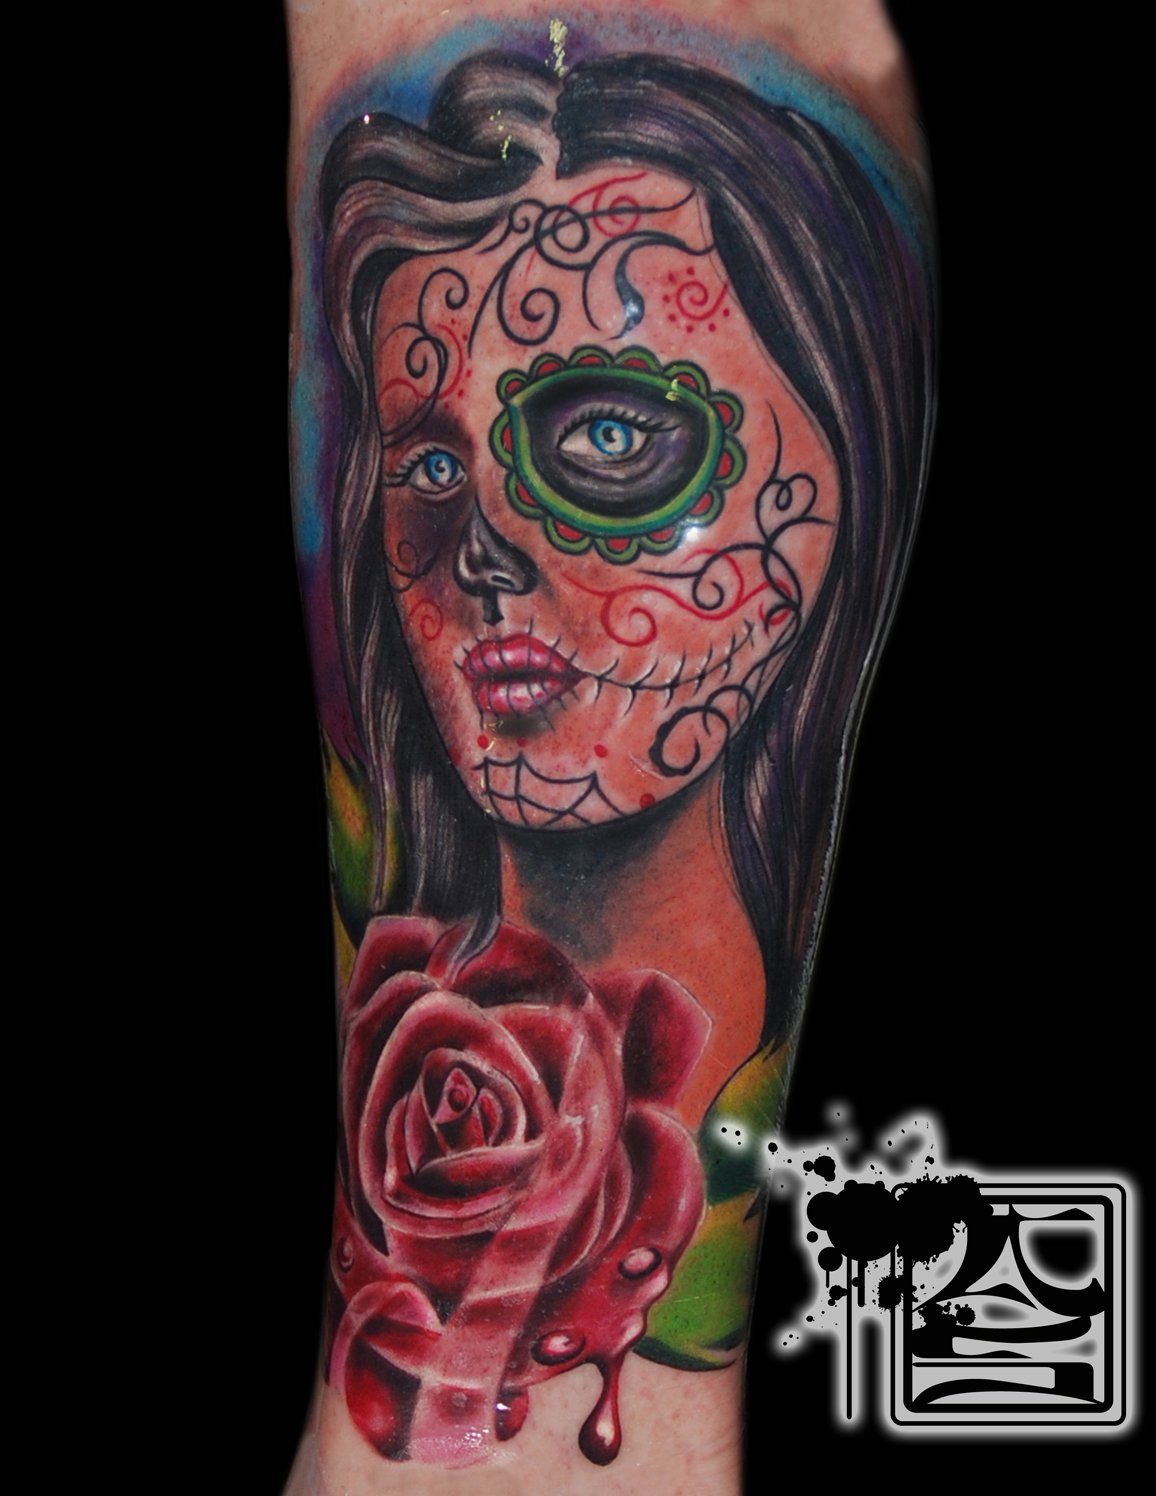 Tatuaje de una calavera mexicana y una rosa